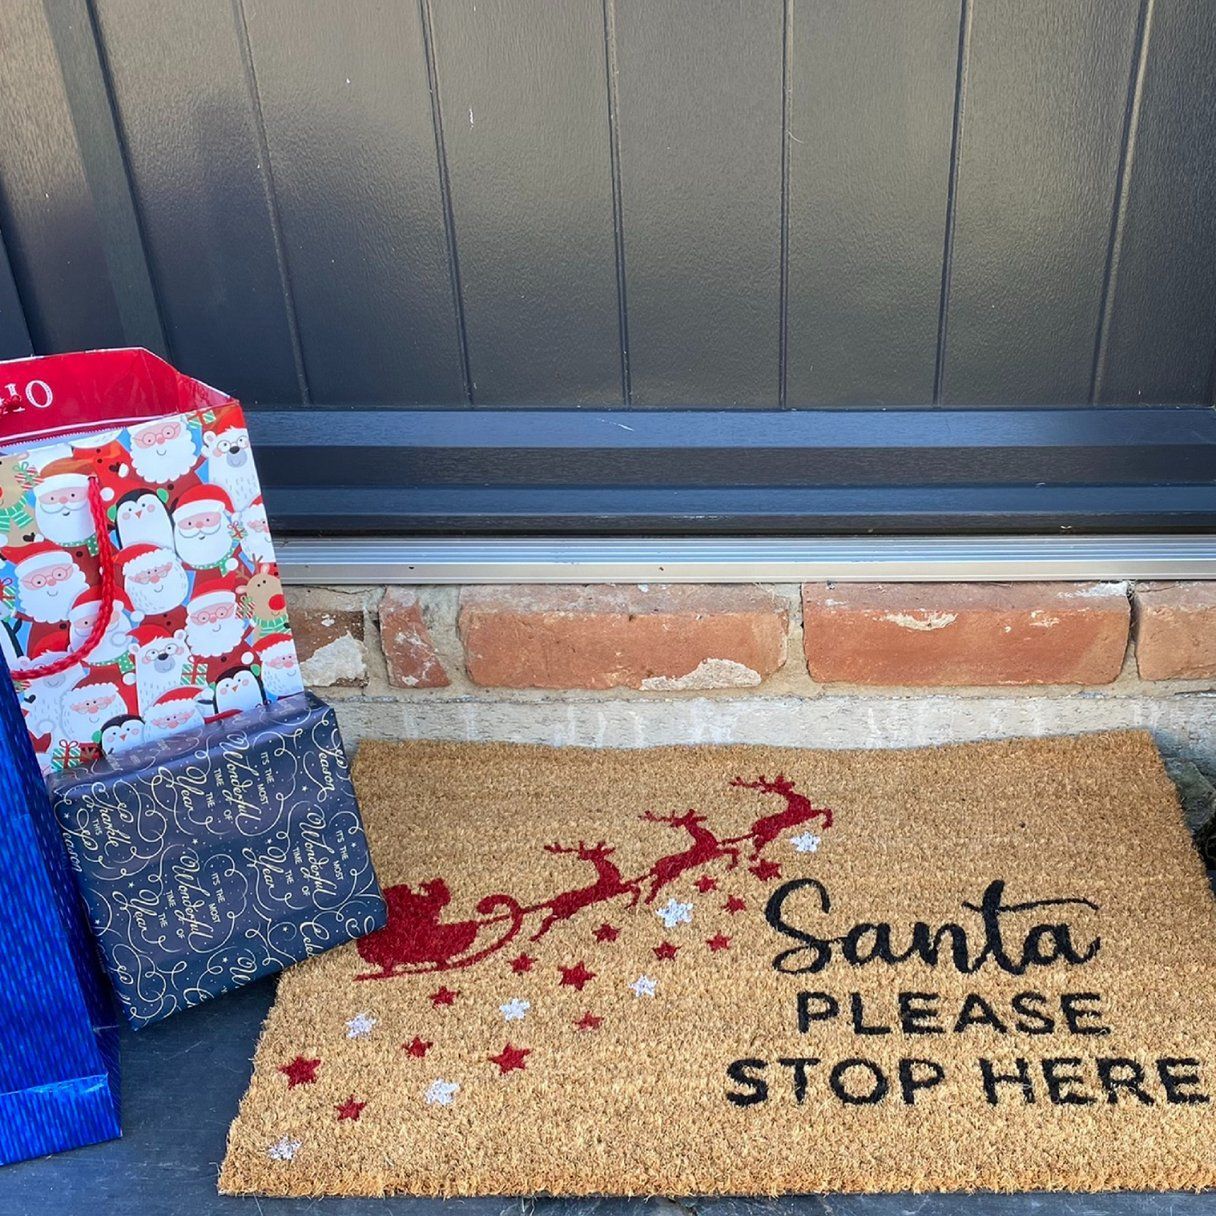 Santa Stop Here Doormat Sleigh - Ashton and Finch